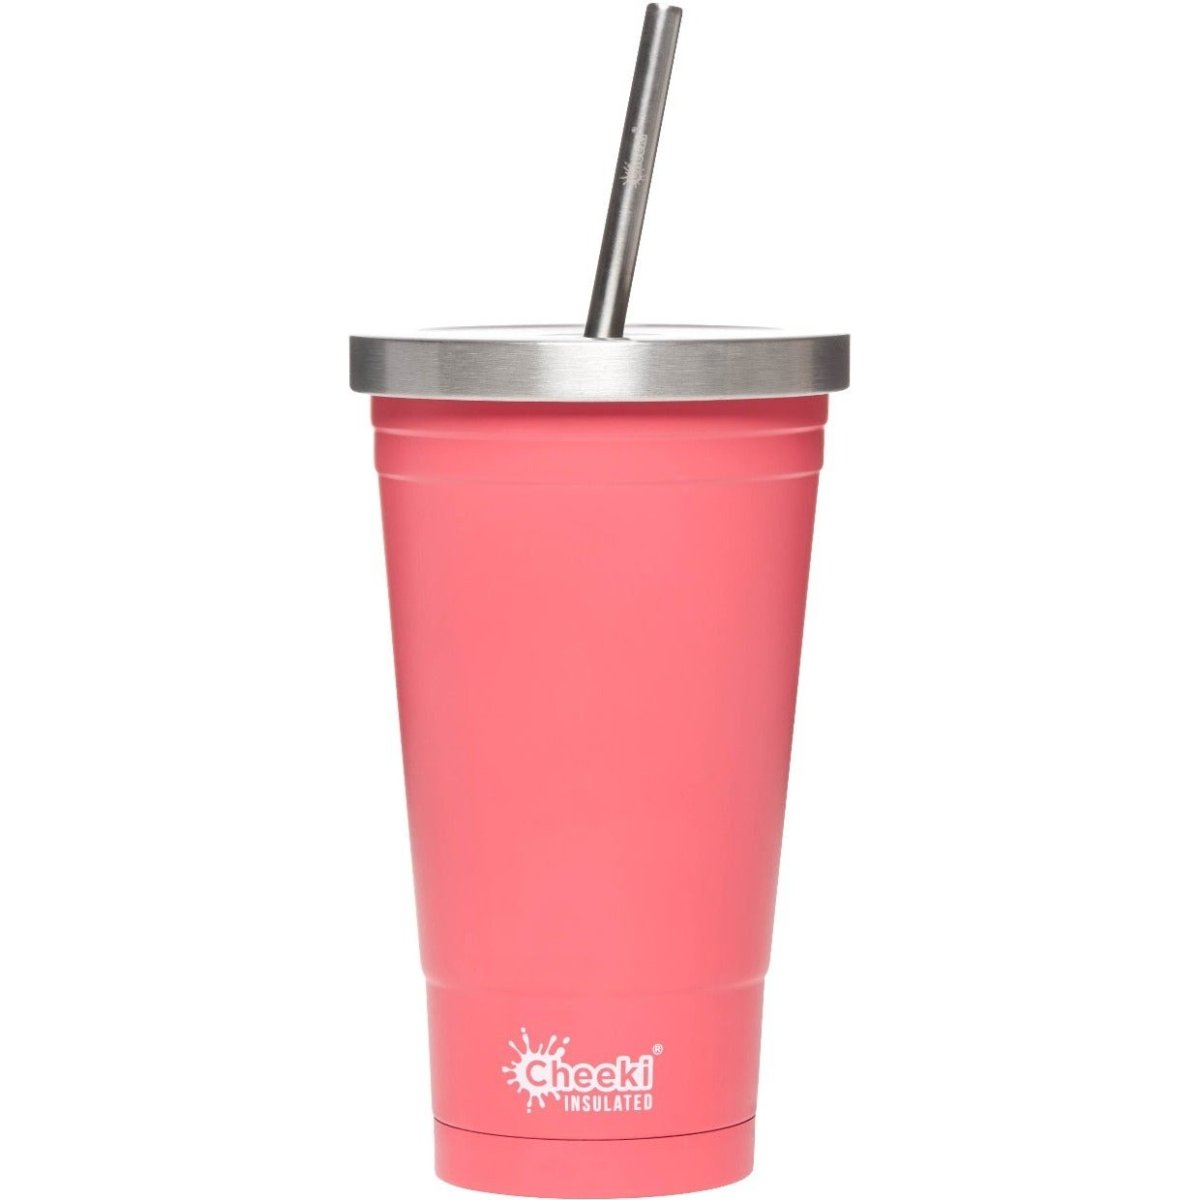 Cheeki 500ml Insulated Drink Tumbler - Dusty Pink